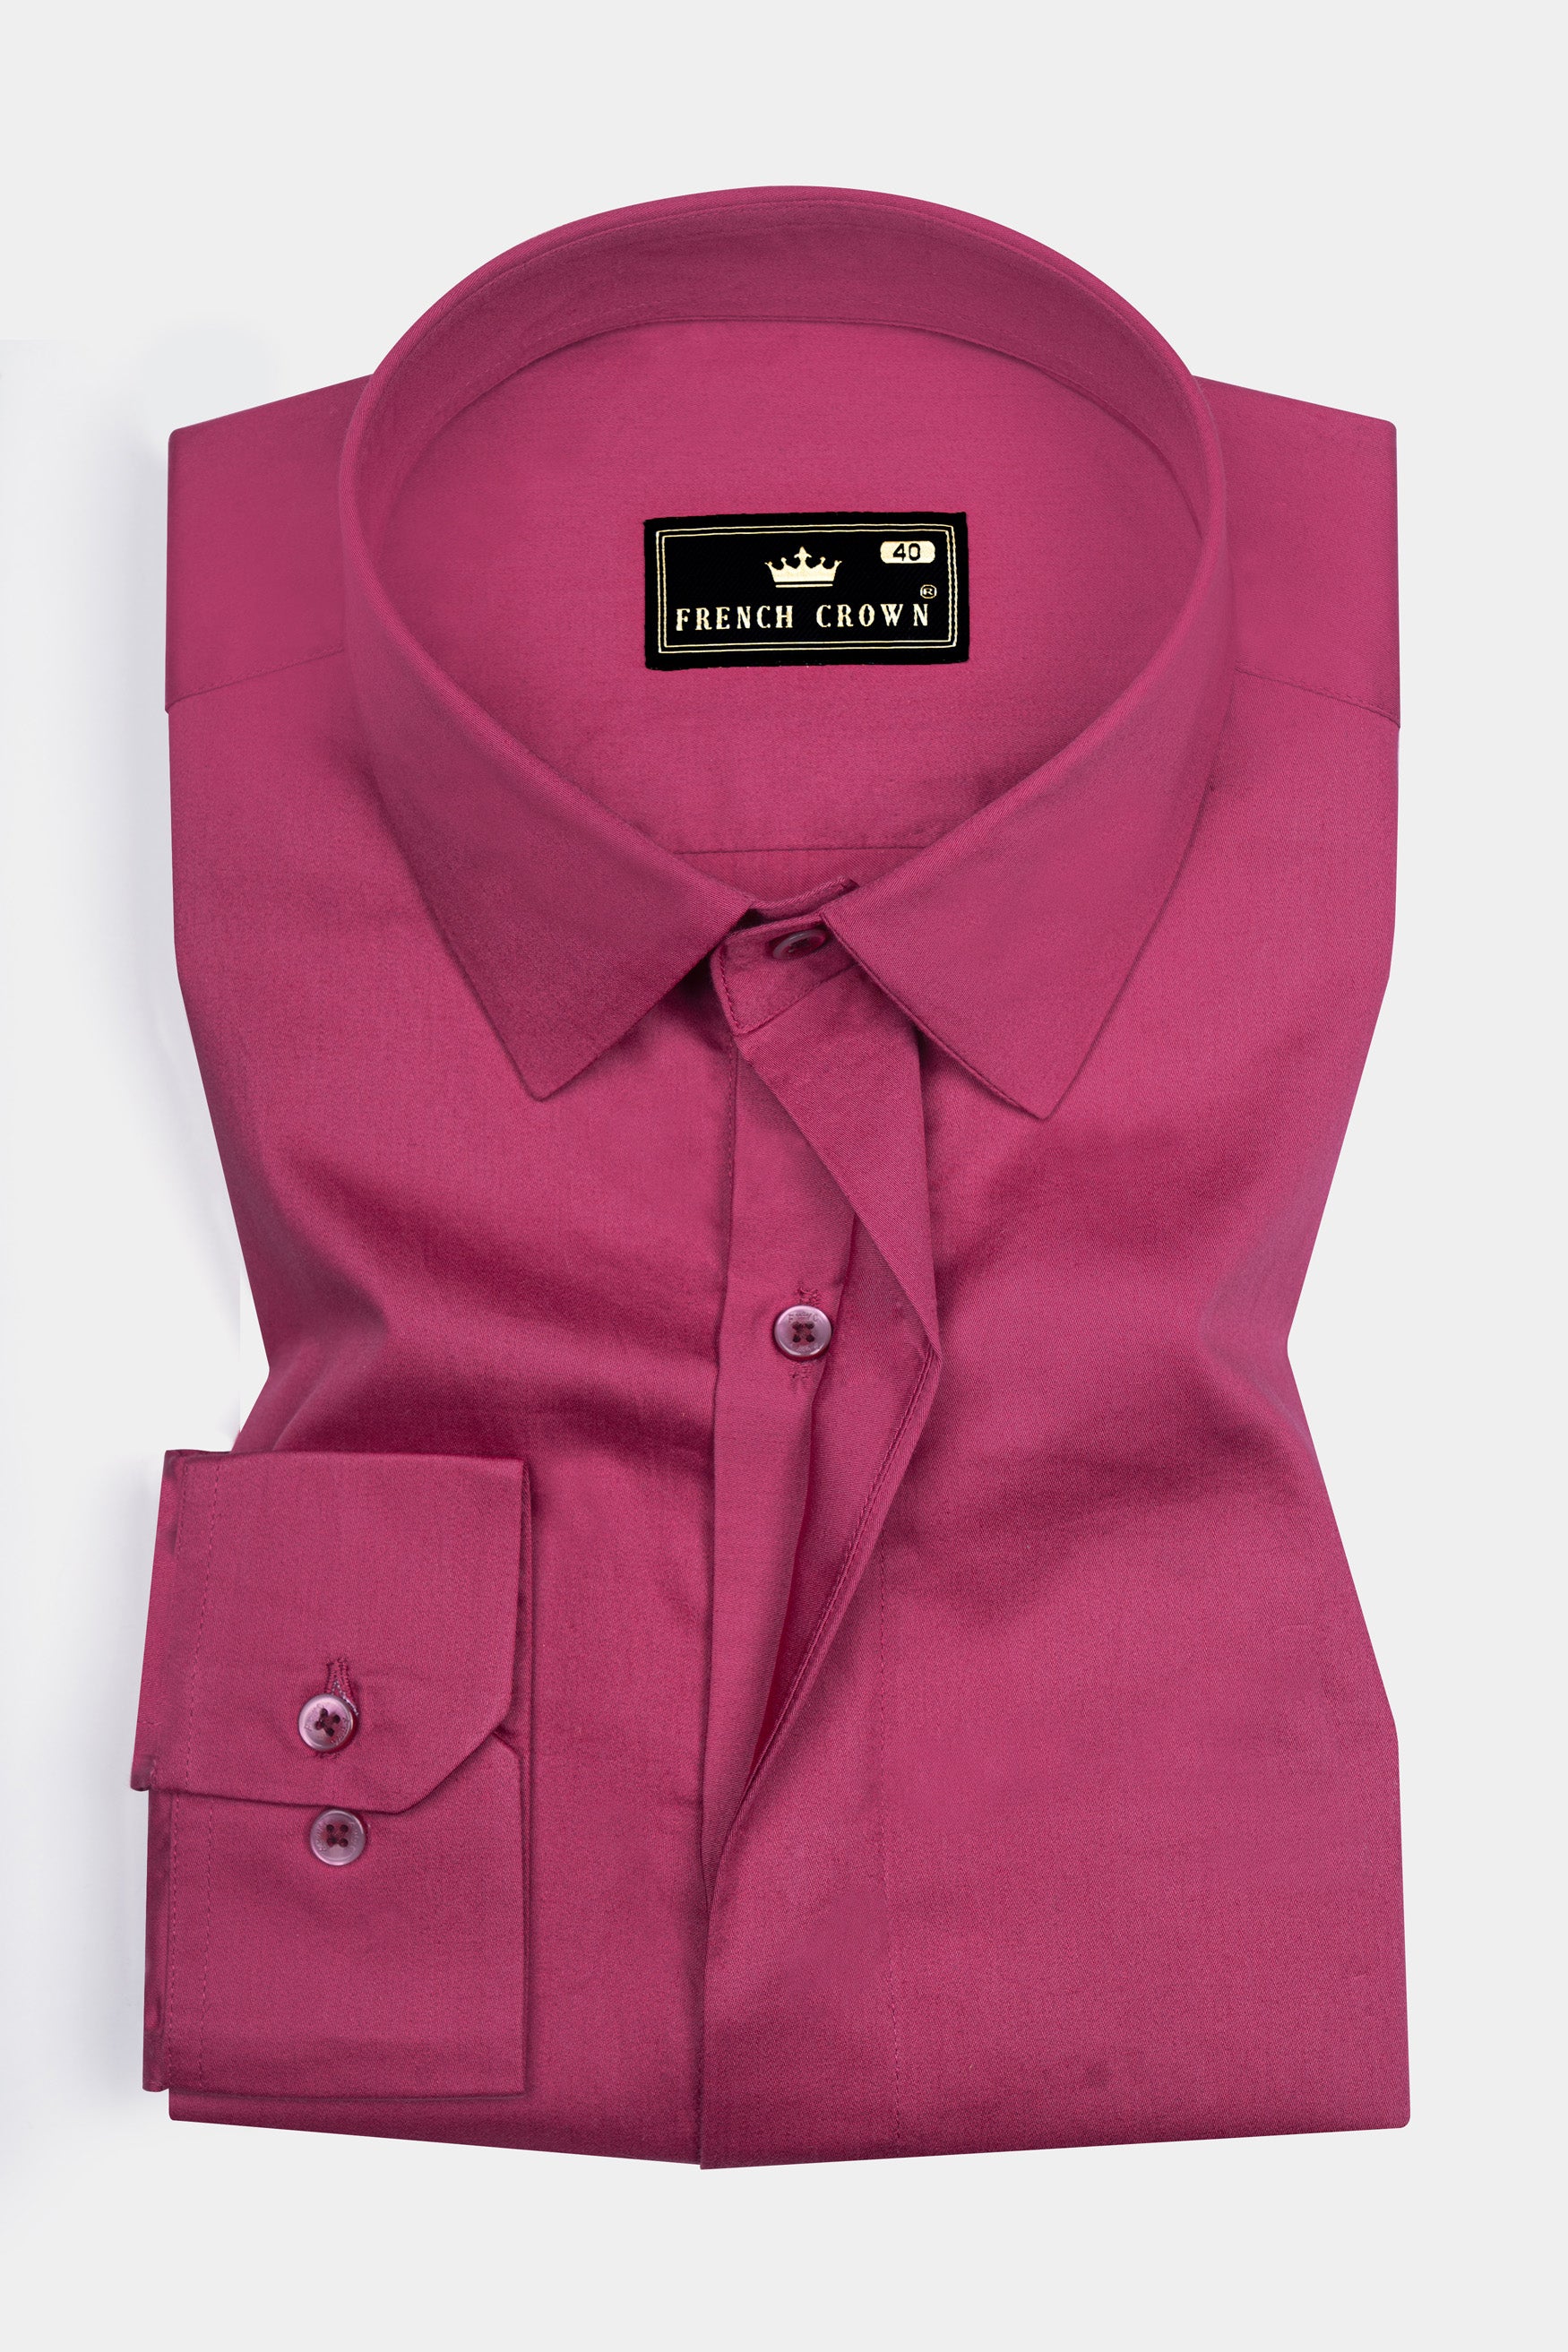 Rouge Pink Hotfix Subtle Sheen Super Soft Premium Cotton Designer Shirt 12033-MN-NP-PP-38, 12033-MN-NP-PP-H-38, 12033-MN-NP-PP-39, 12033-MN-NP-PP-H-39, 12033-MN-NP-PP-40, 12033-MN-NP-PP-H-40, 12033-MN-NP-PP-42, 12033-MN-NP-PP-H-42, 12033-MN-NP-PP-44, 12033-MN-NP-PP-H-44, 12033-MN-NP-PP-46, 12033-MN-NP-PP-H-46, 12033-MN-NP-PP-48, 12033-MN-NP-PP-H-48, 12033-MN-NP-PP-50, 12033-MN-NP-PP-H-50, 12033-MN-NP-PP-52, 12033-MN-NP-PP-H-52